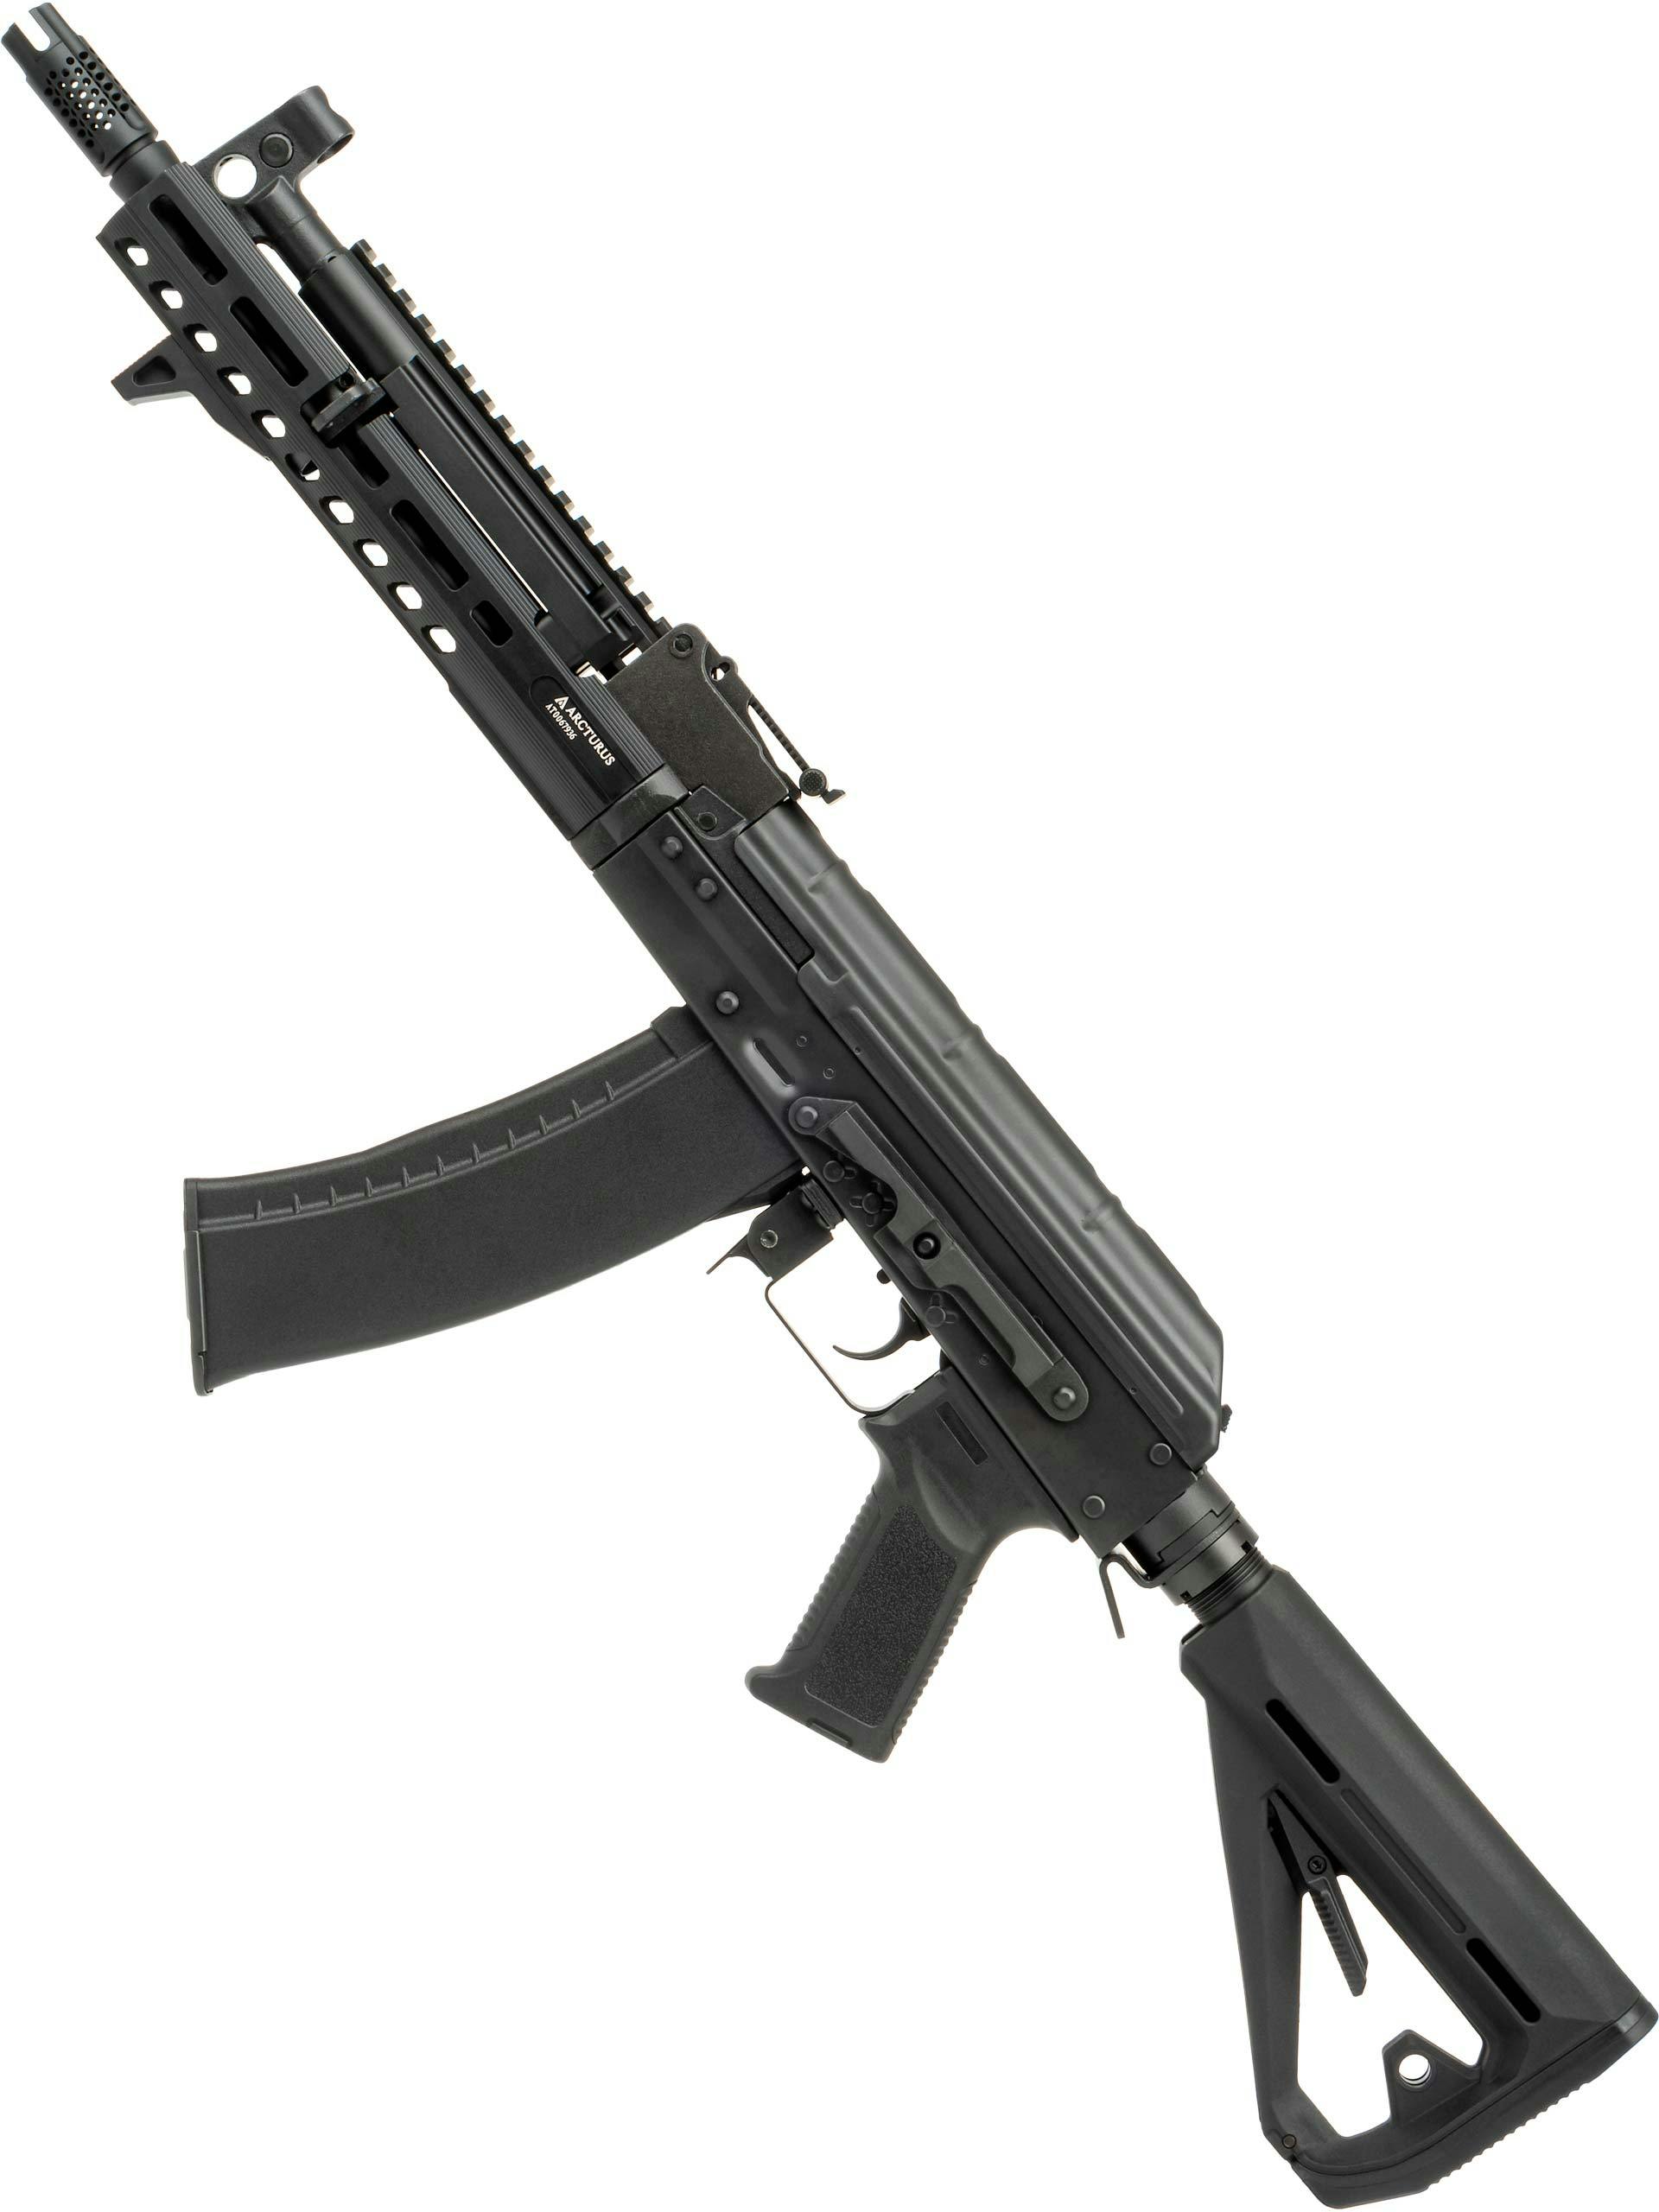 ARCTURUS AK-105 Draco Custom AT-AK01 AEG | Patrol Base UK